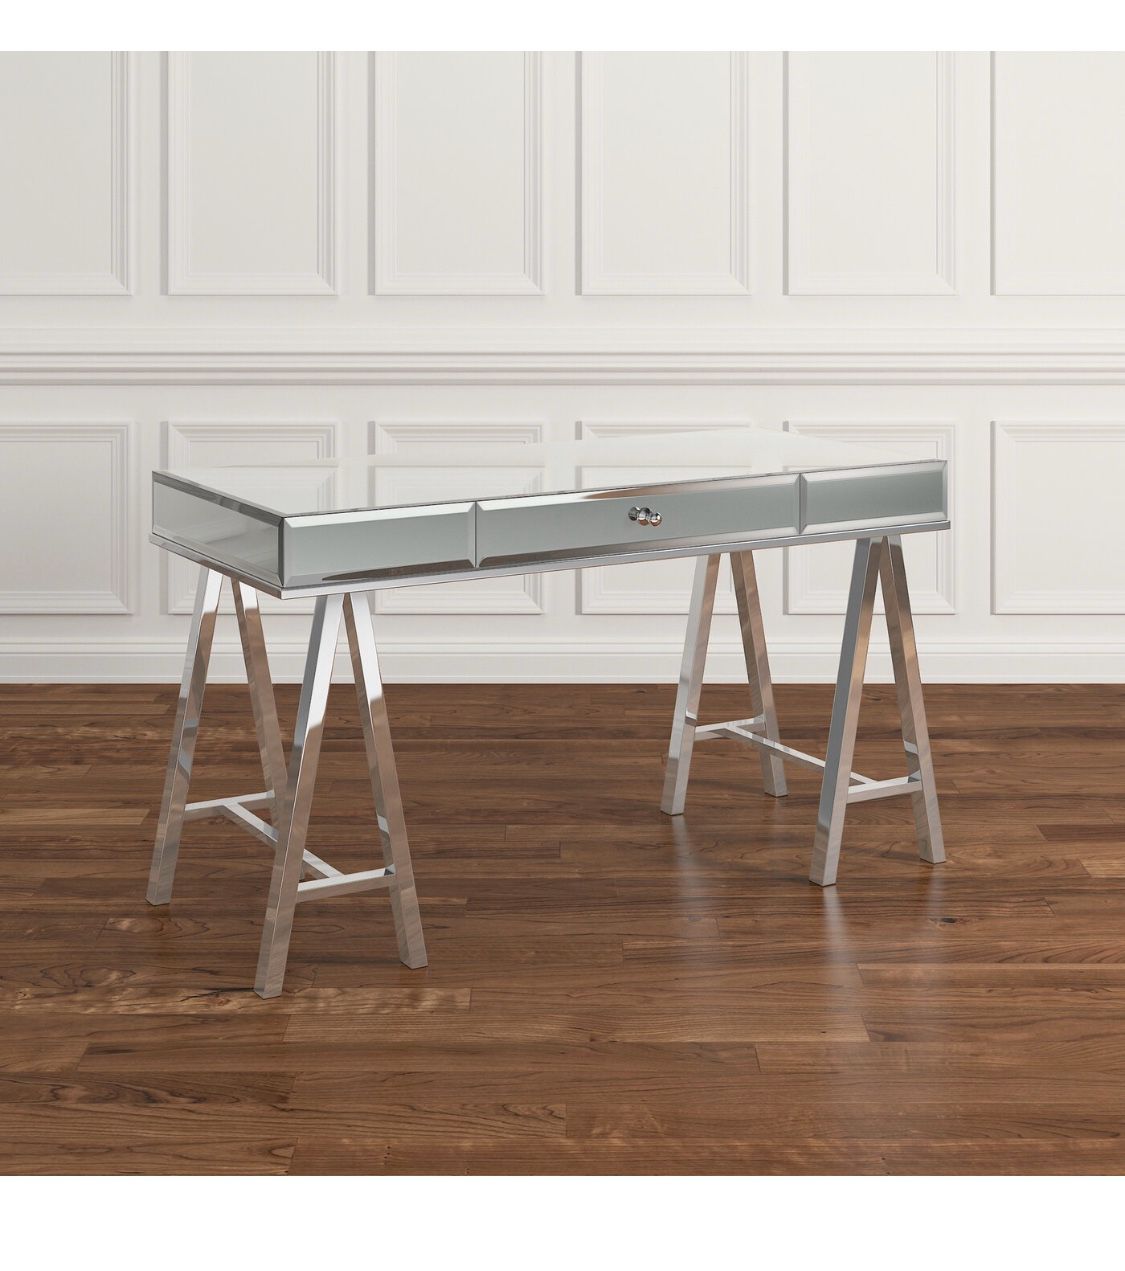 Mirrored desk/vanity table